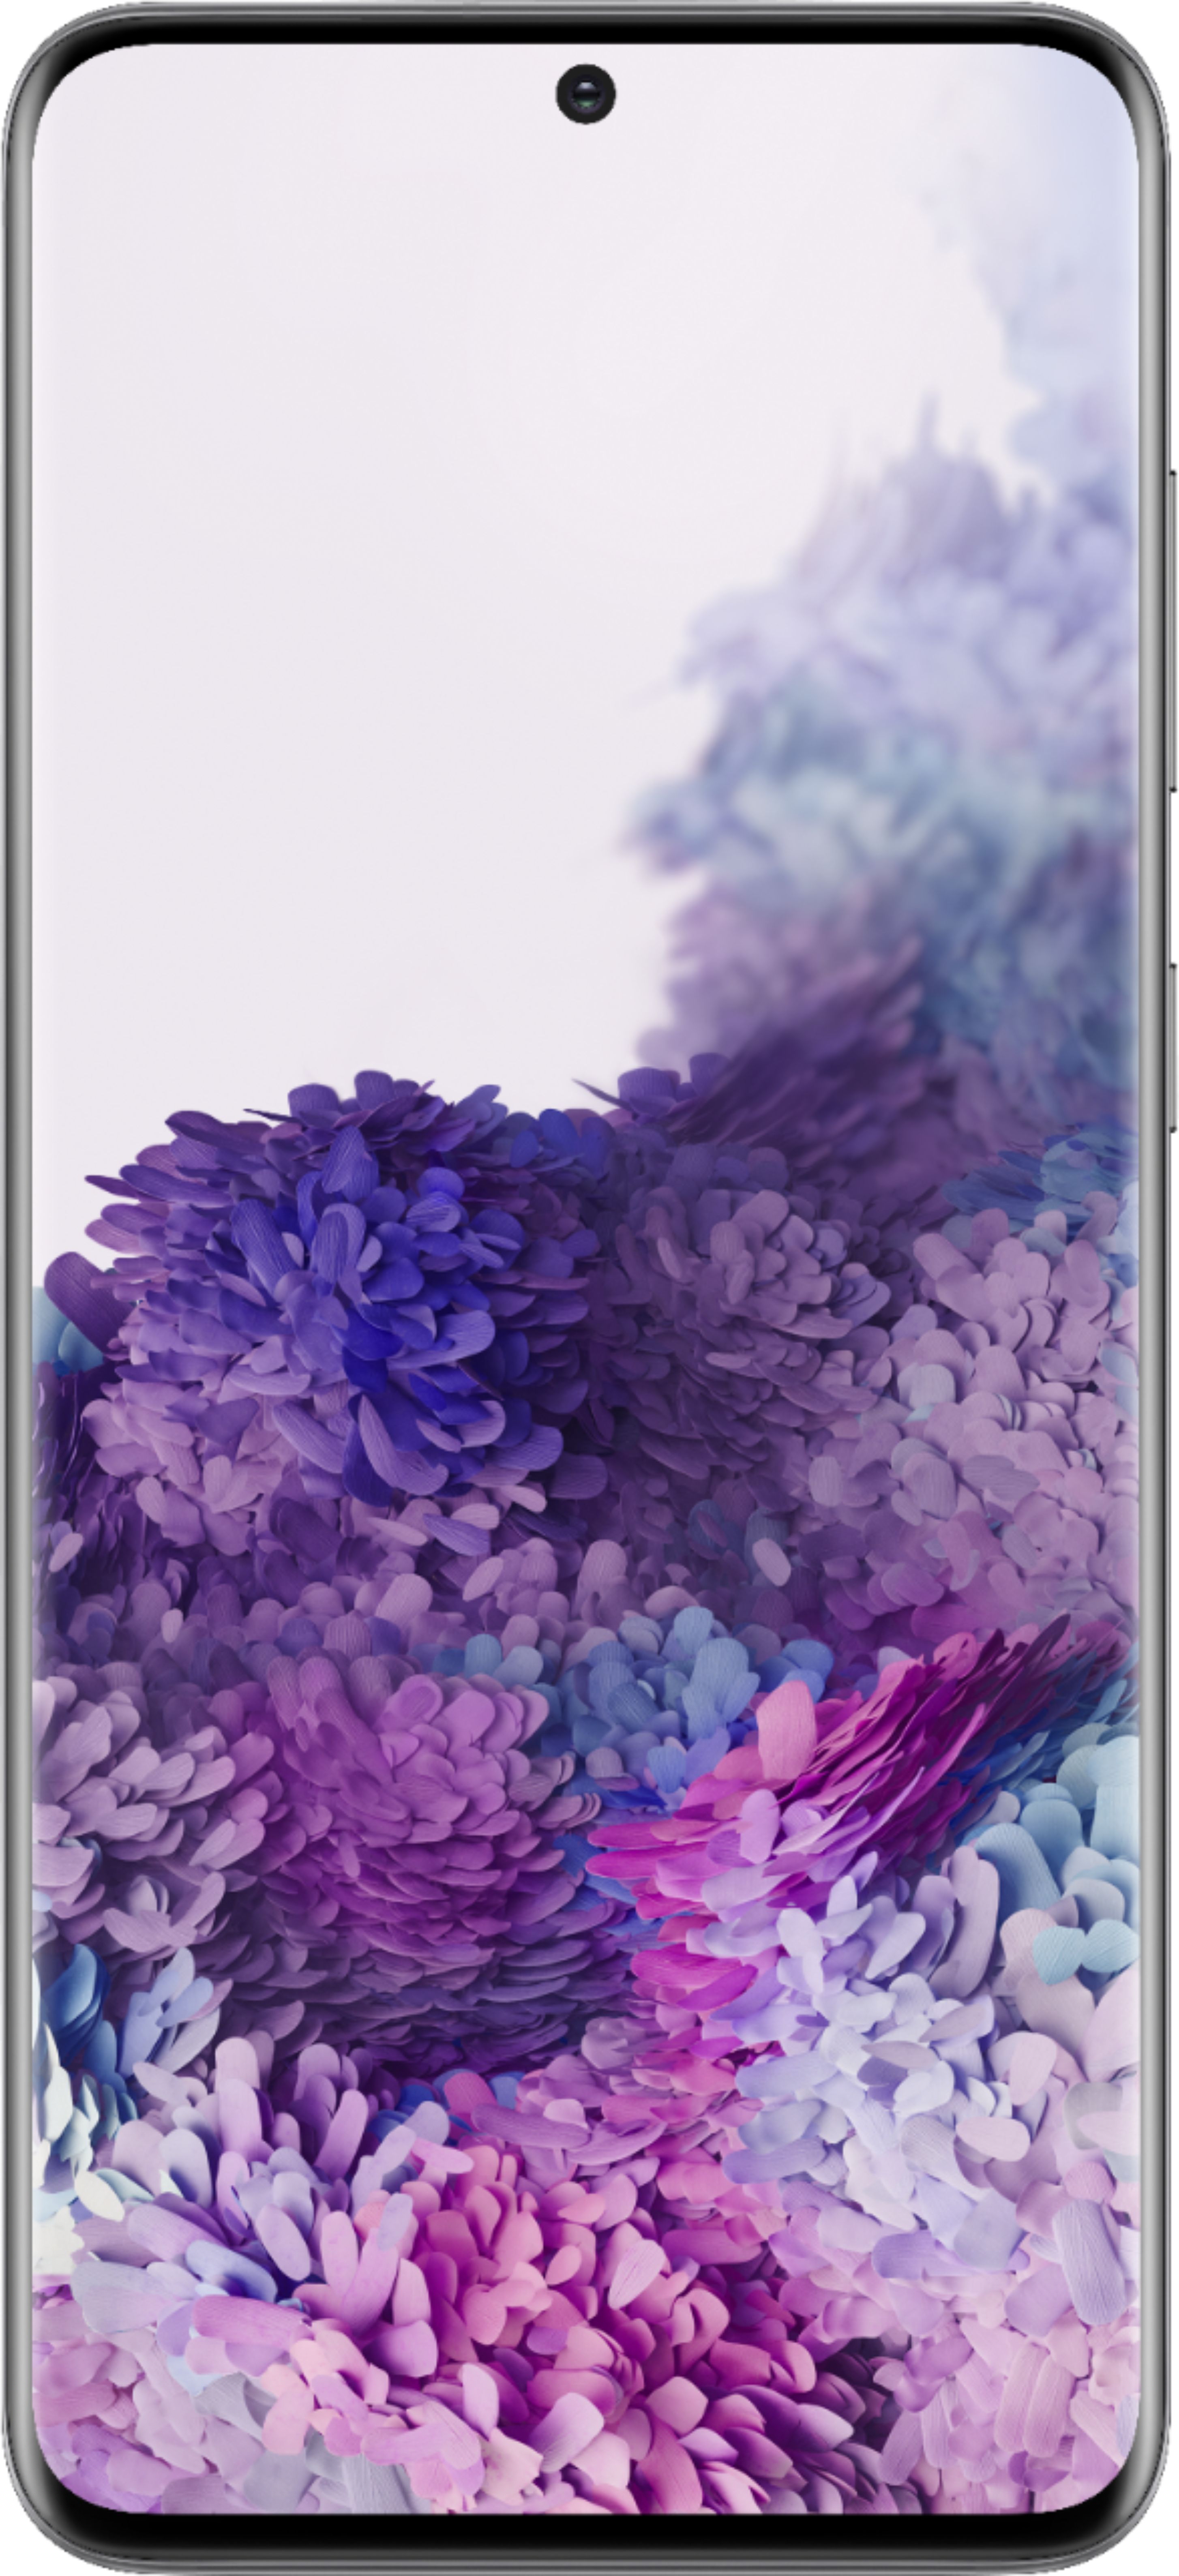 Samsung - Galaxy S20 5G Enabled 128GB (Unlocked) - Cosmic Gray